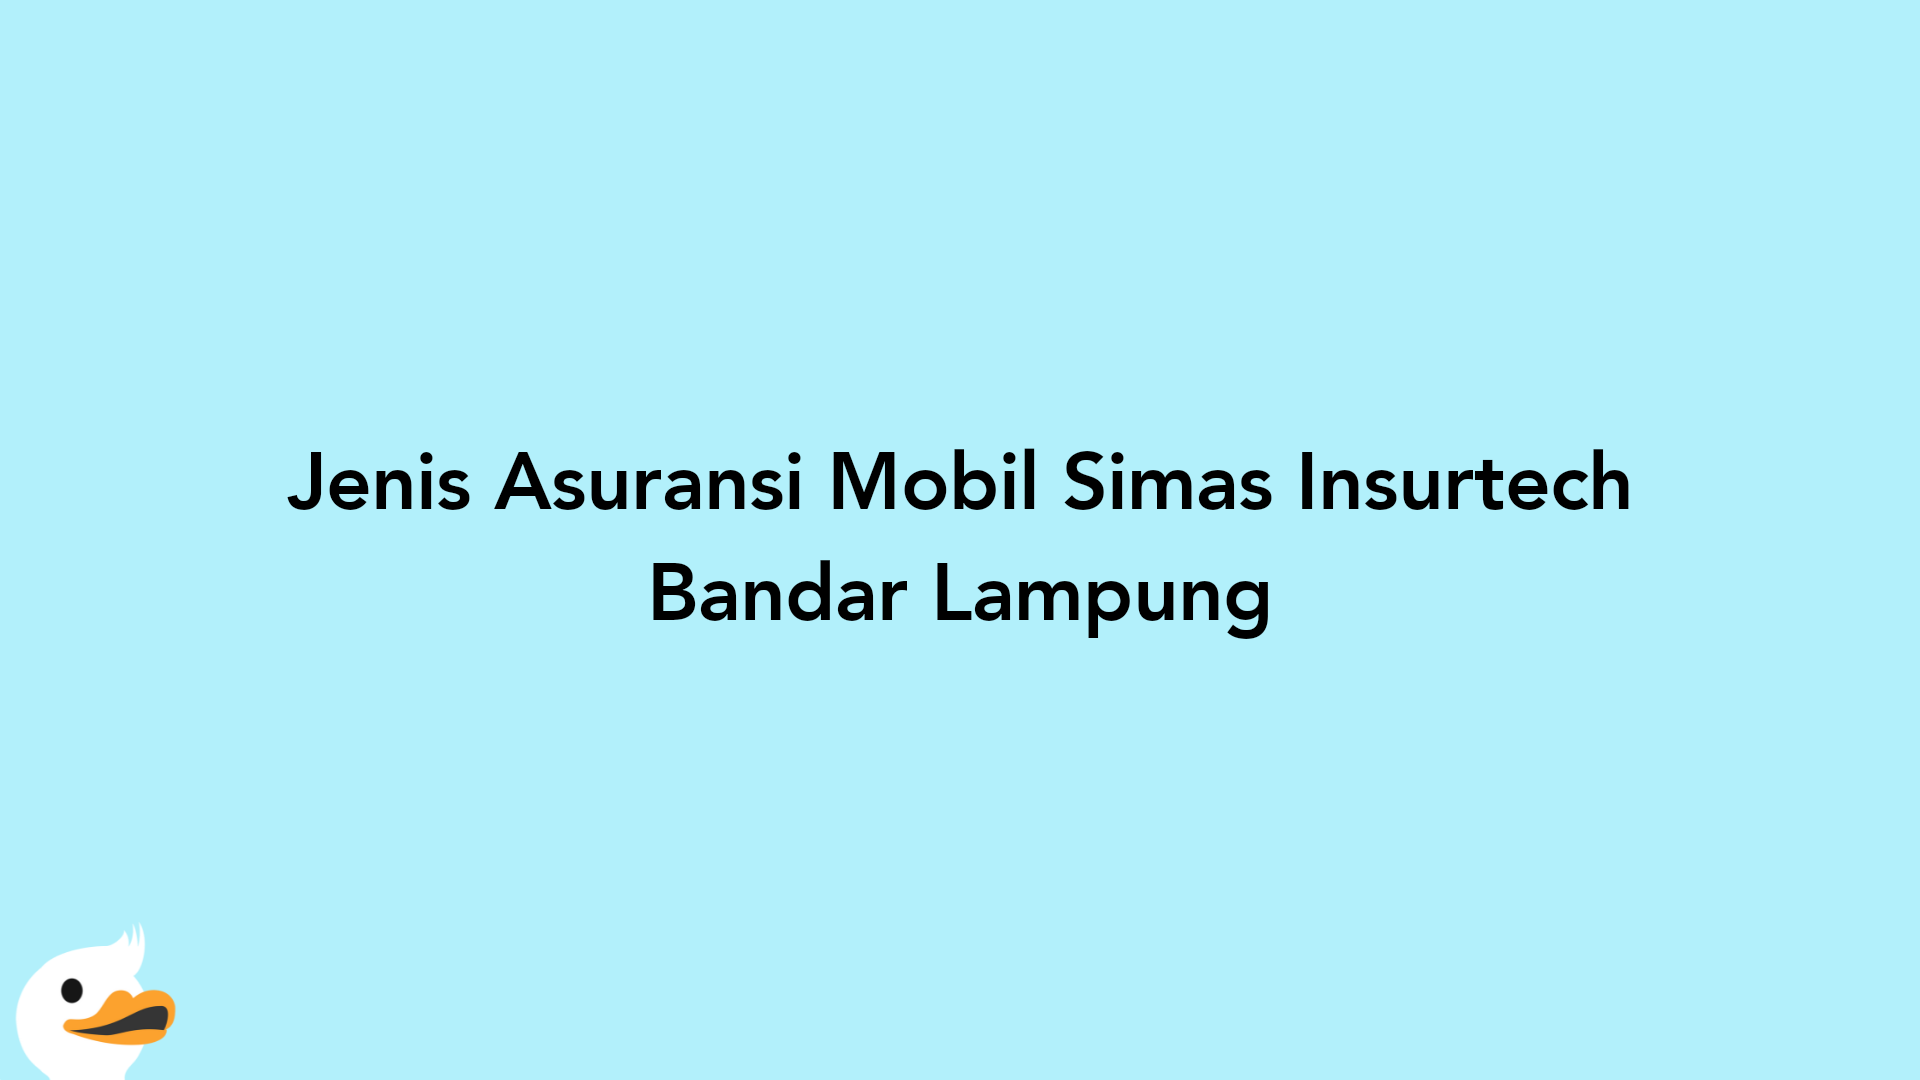 Jenis Asuransi Mobil Simas Insurtech Bandar Lampung